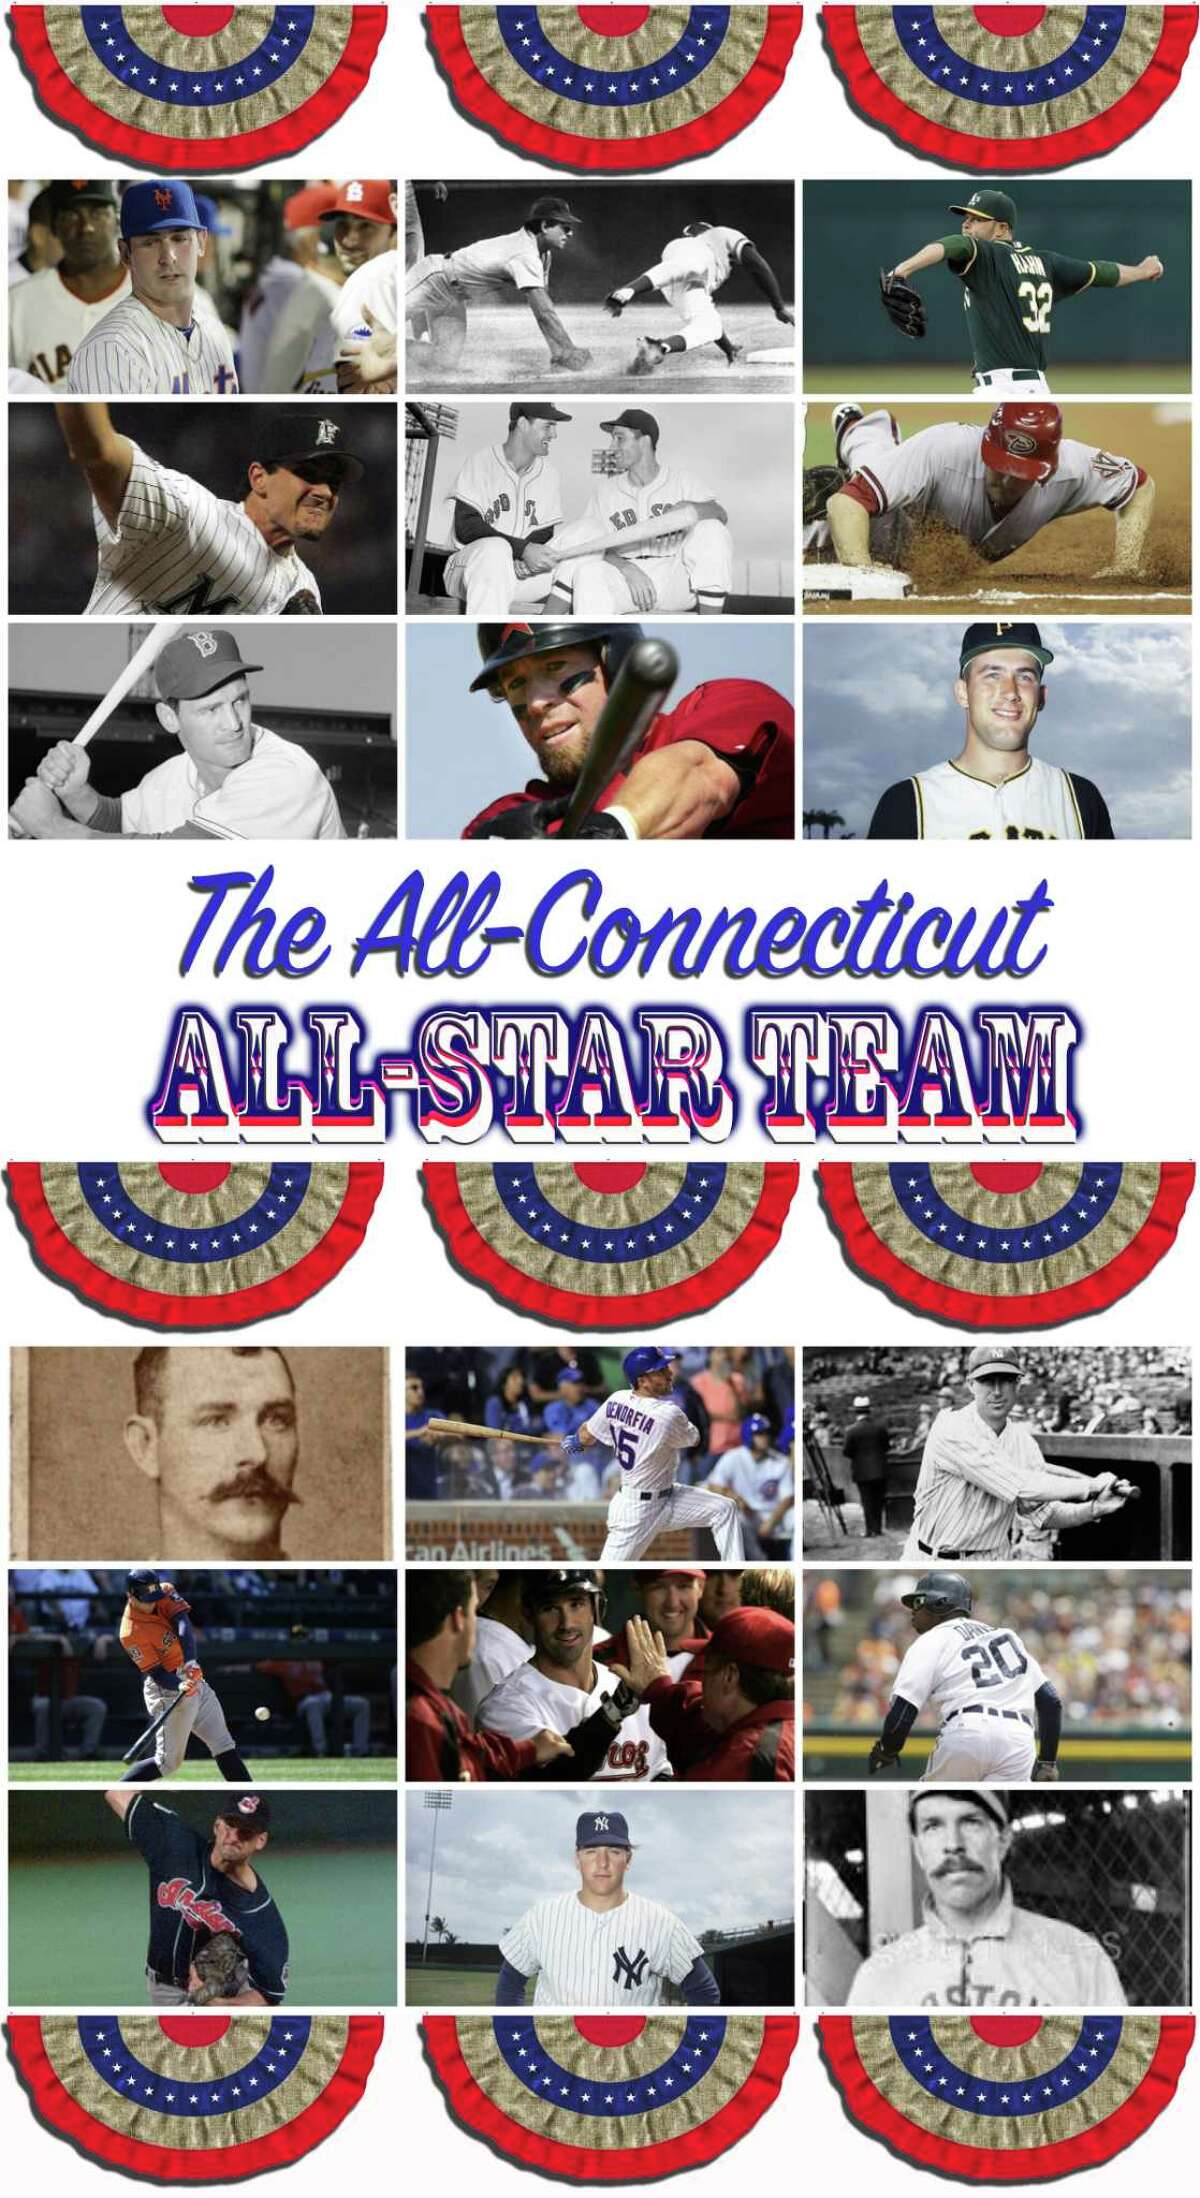 2012 Major League Baseball All-Star Game - Wikipedia